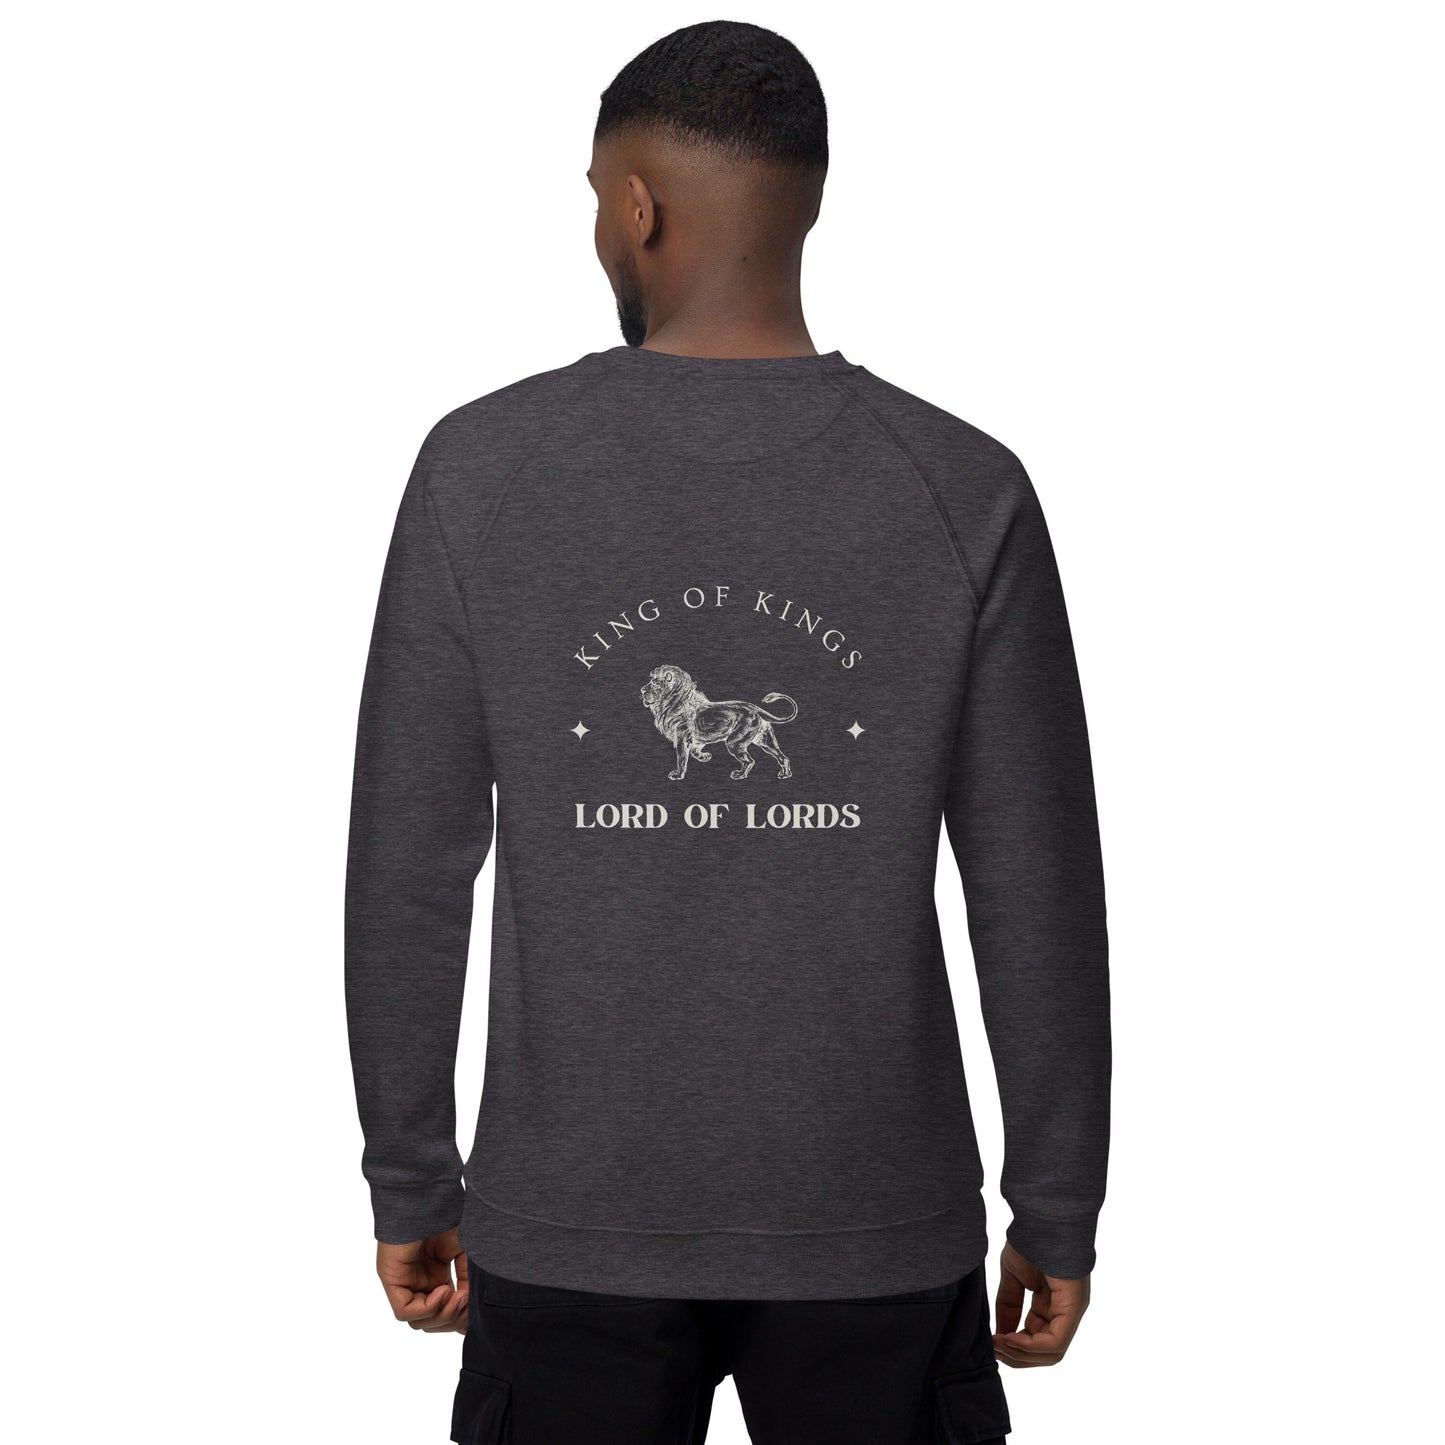 Unisex organic raglan sweatshirt - KING OF KINGS